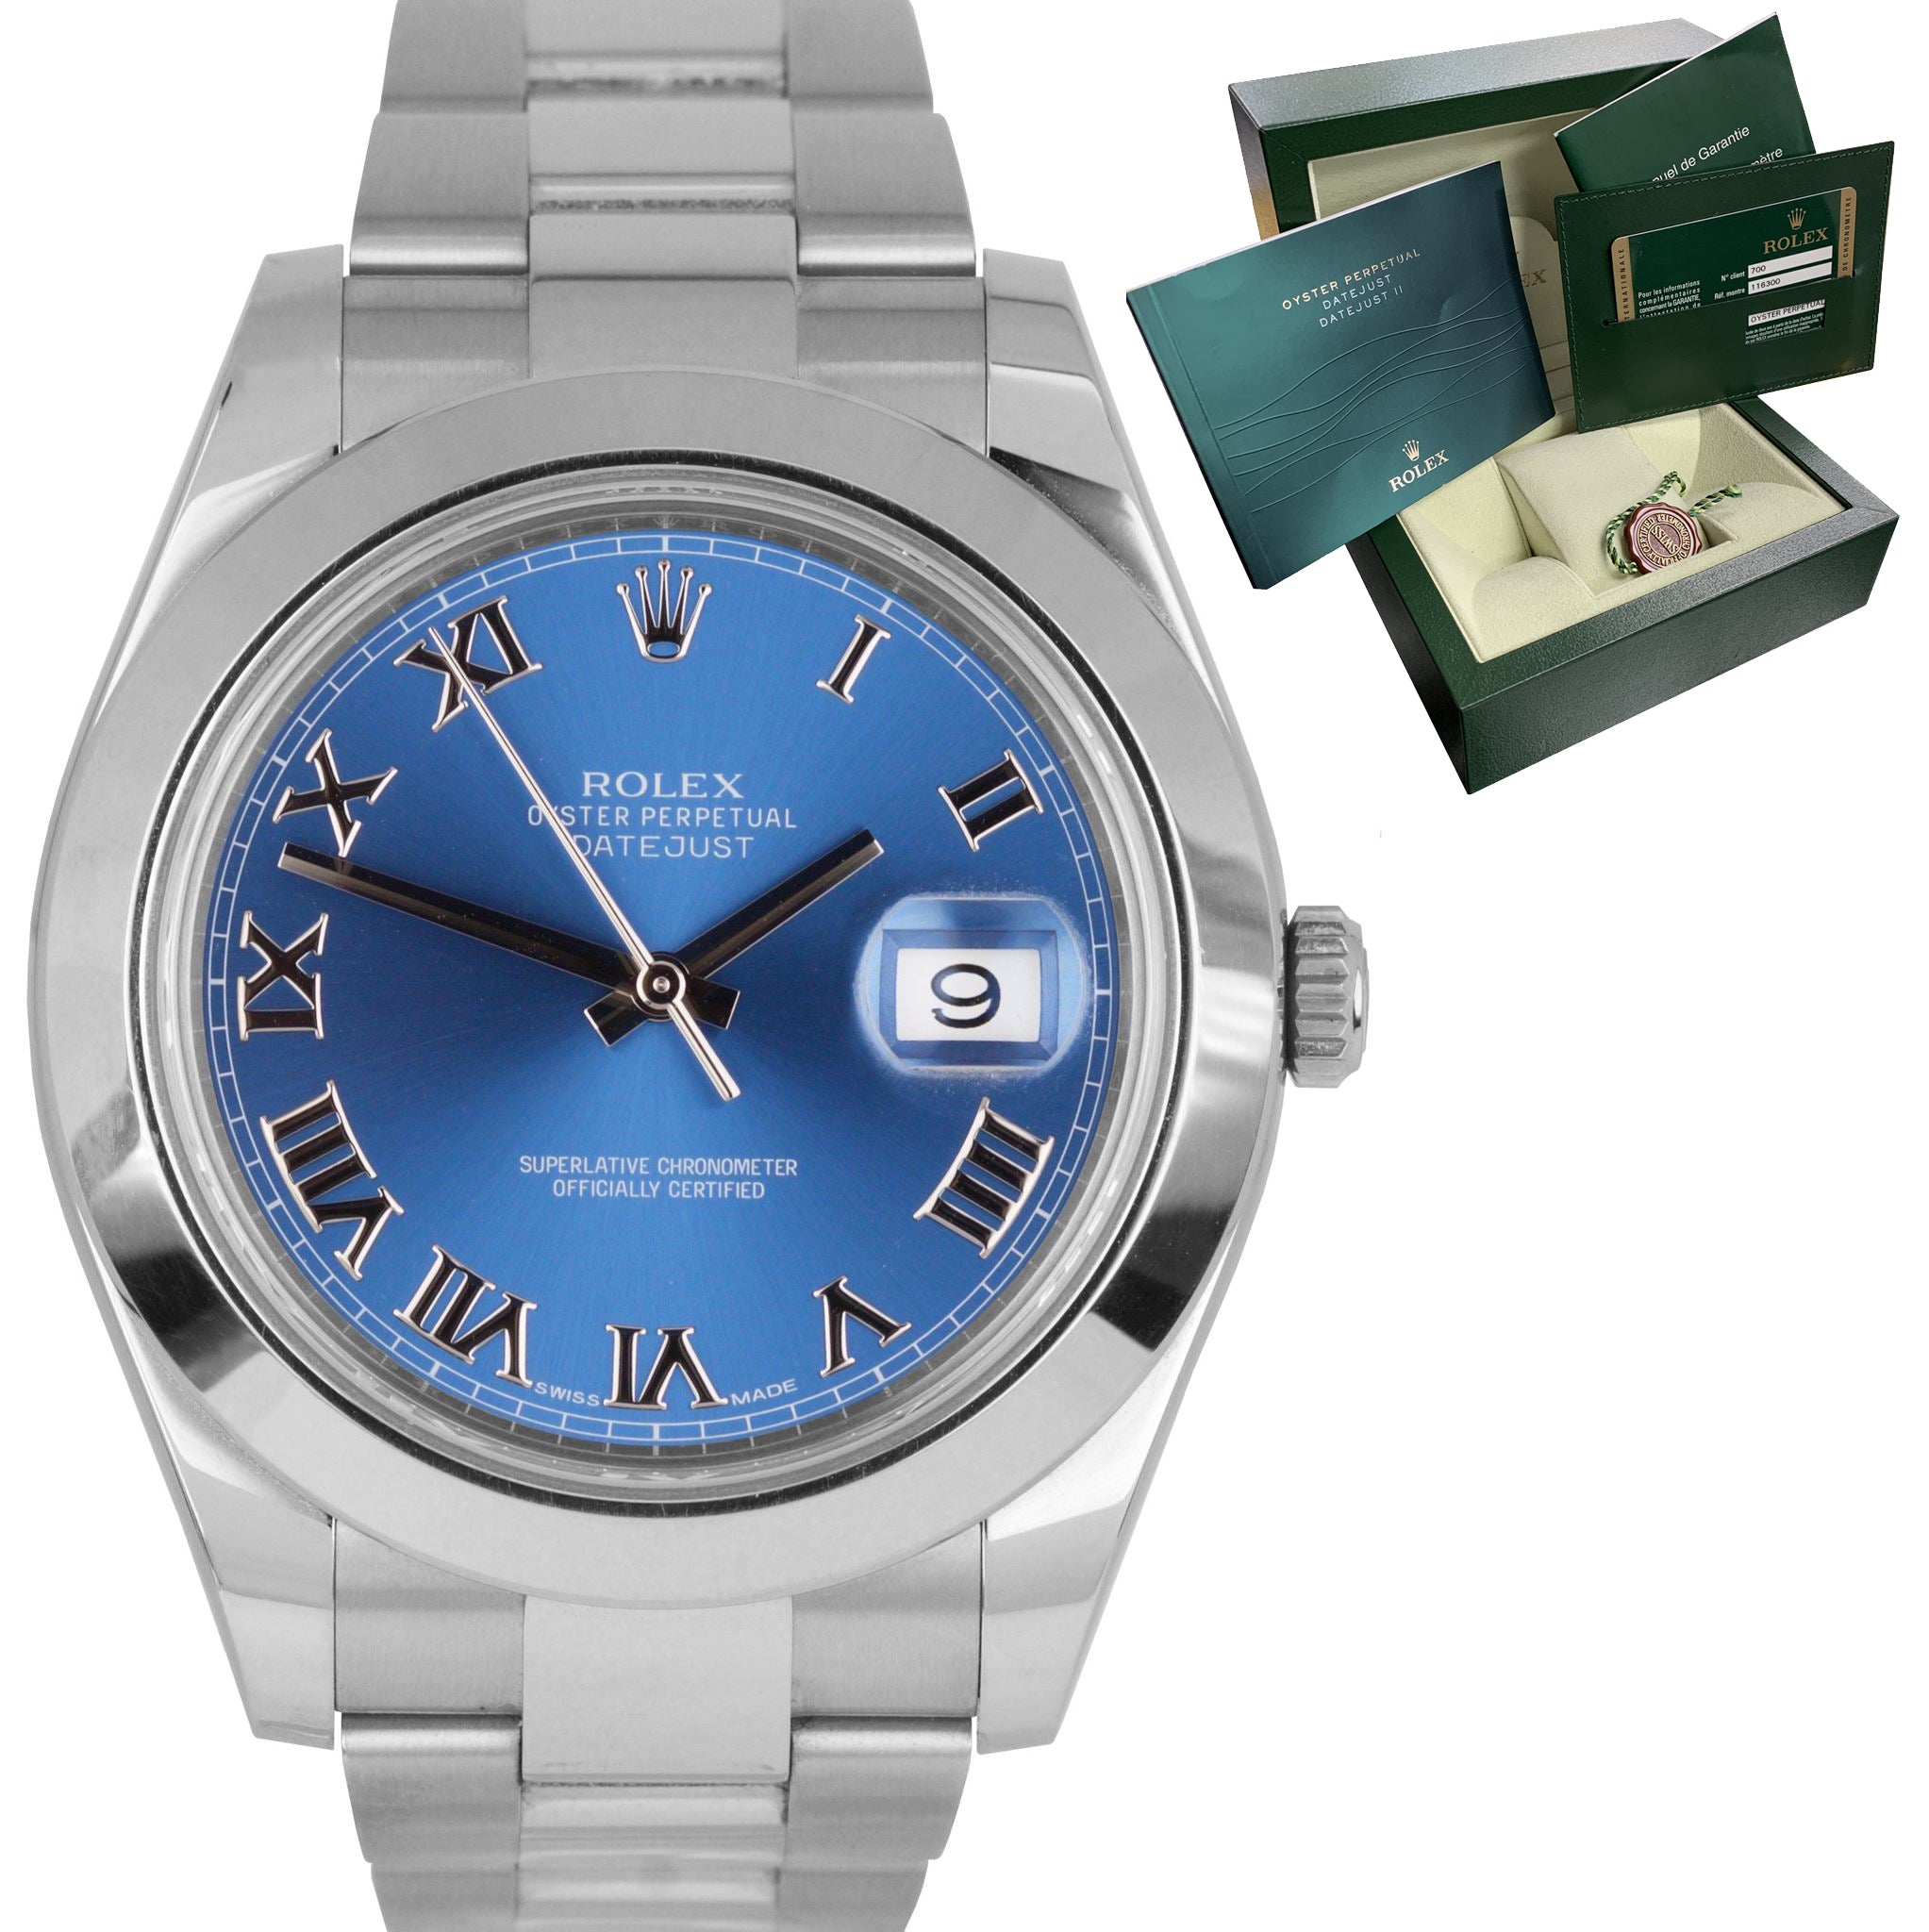 MINT Rolex DateJust II 41mm 116300 Azzurro Blue Roman Stainless Smooth Watch BP